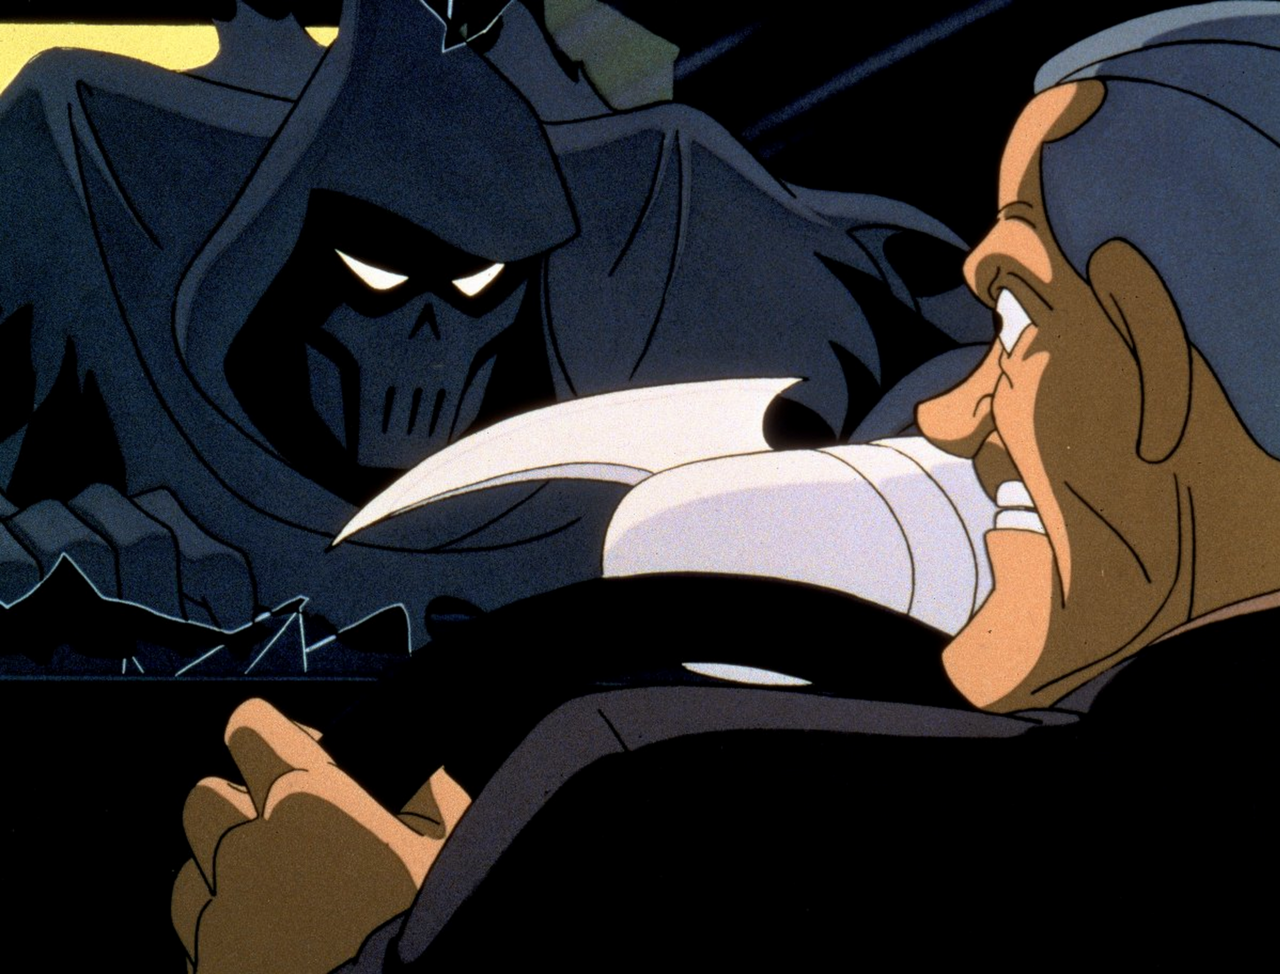 20. Batman: Mask of the Phantasm